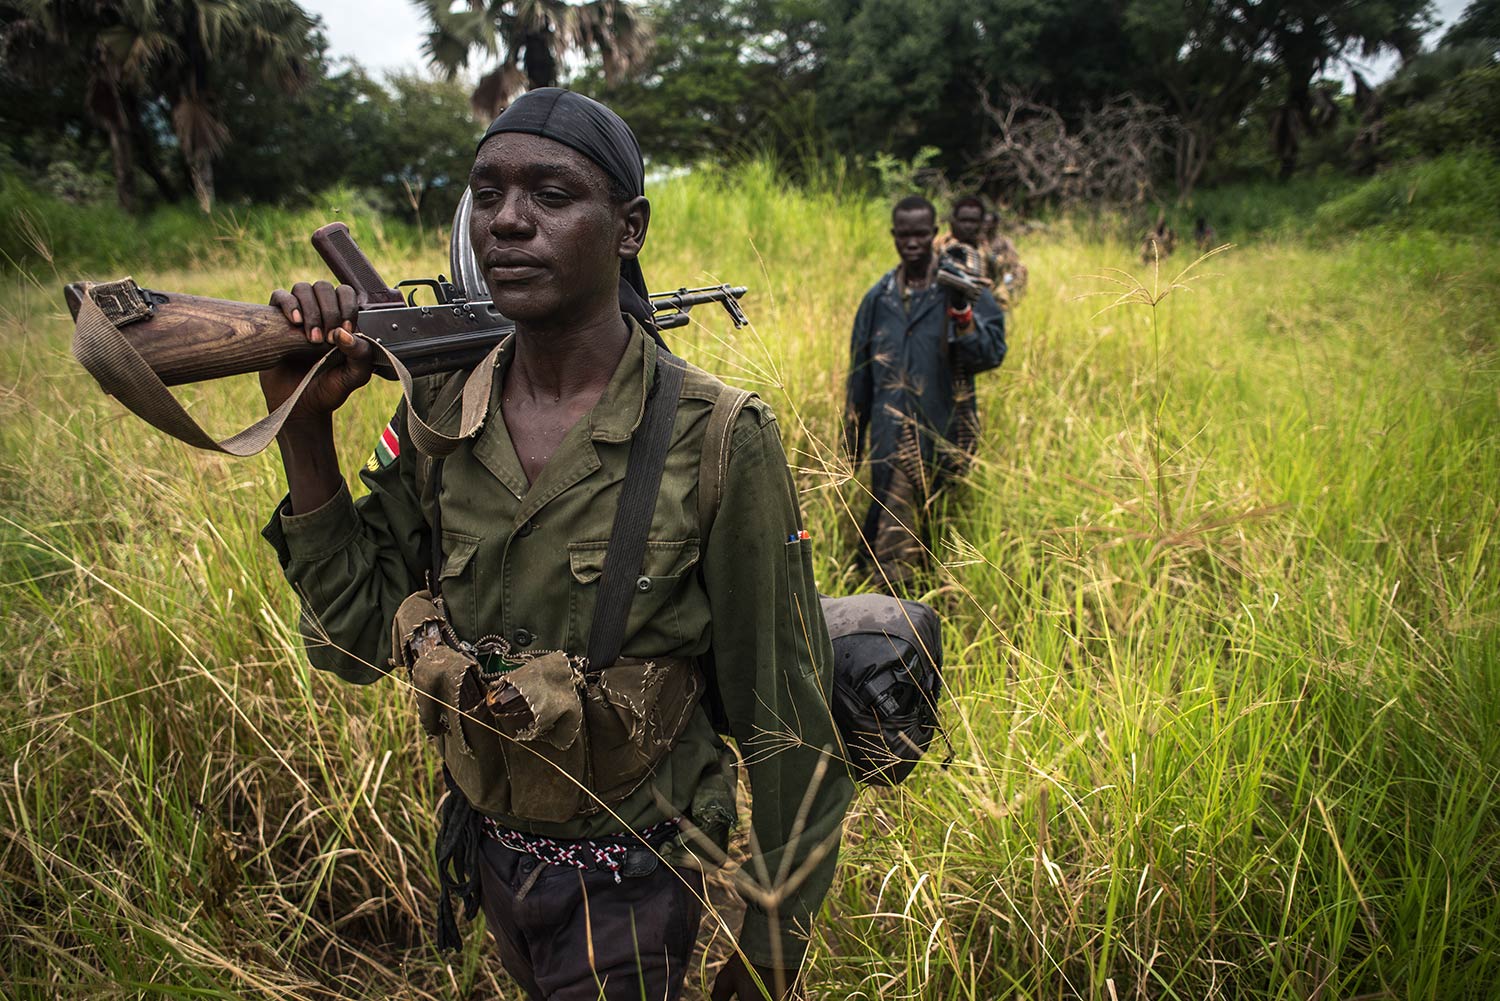 South Sudan. USHMM/Jason Patinkin.